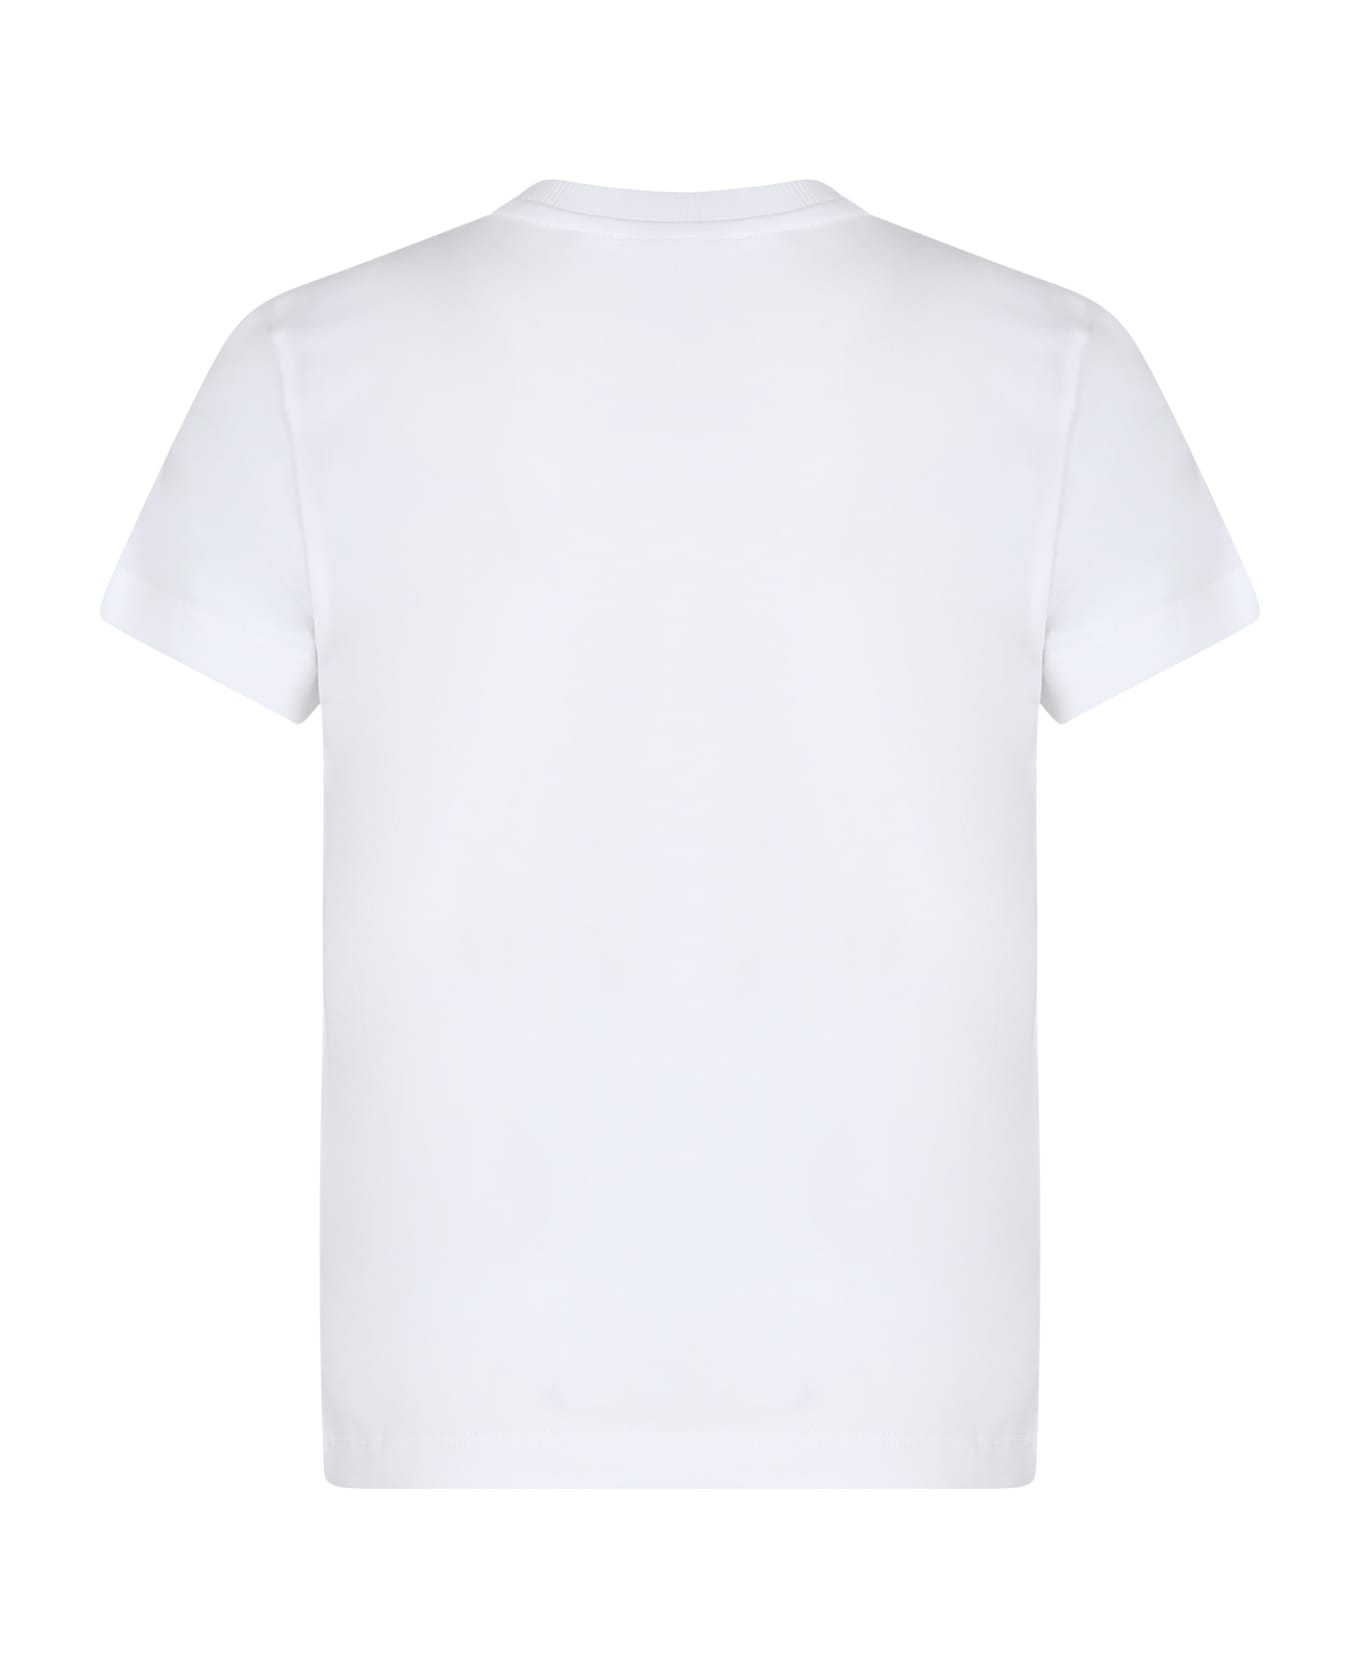 Moschino White T-shirt For Kids With Logo - White